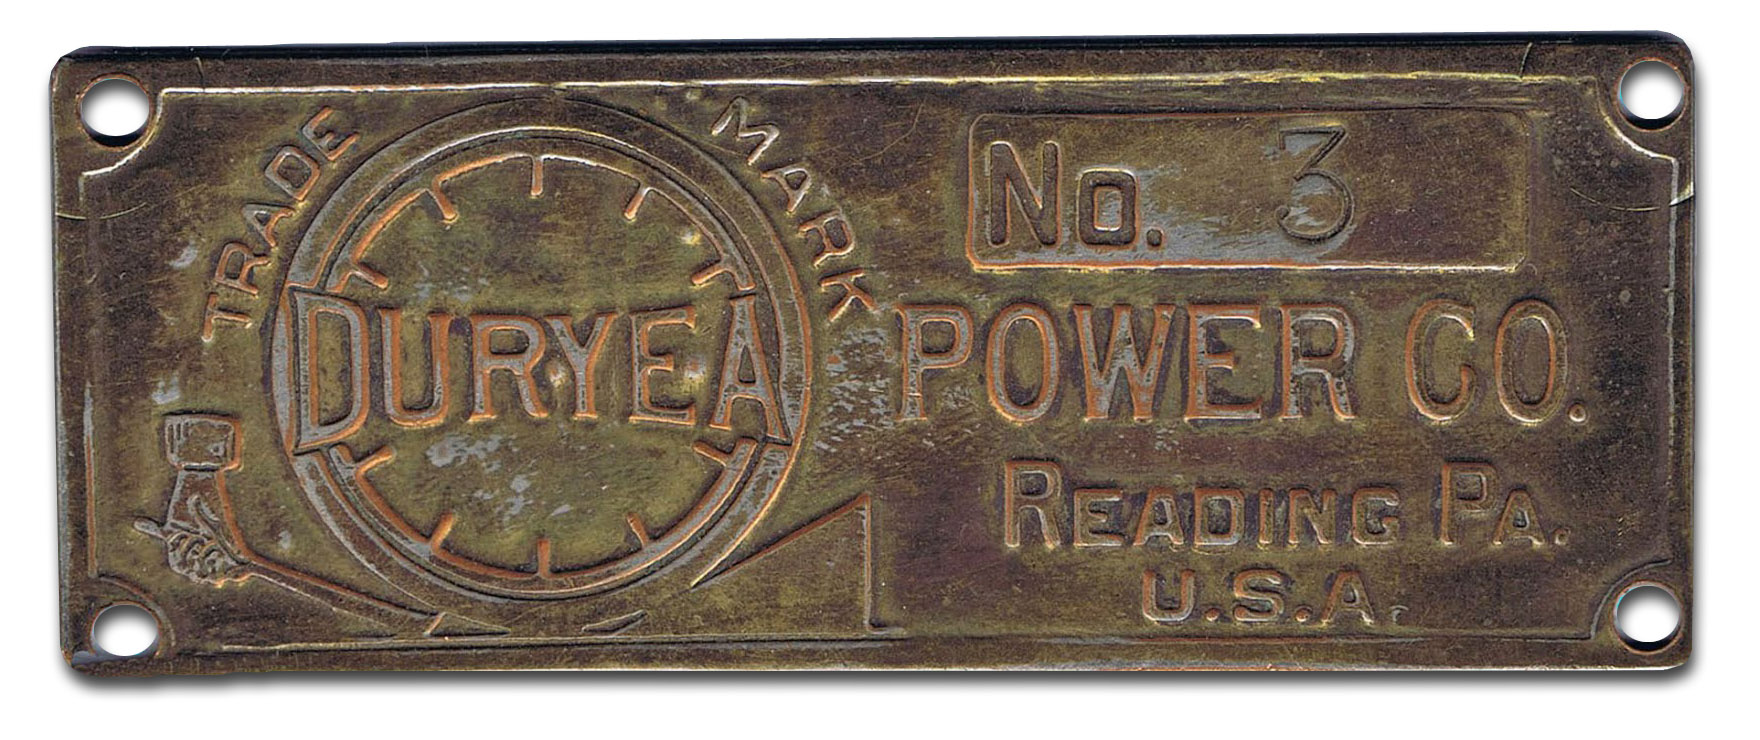 1900. Duryea Power Company (1900-1911 Reading, Pennsylvania)